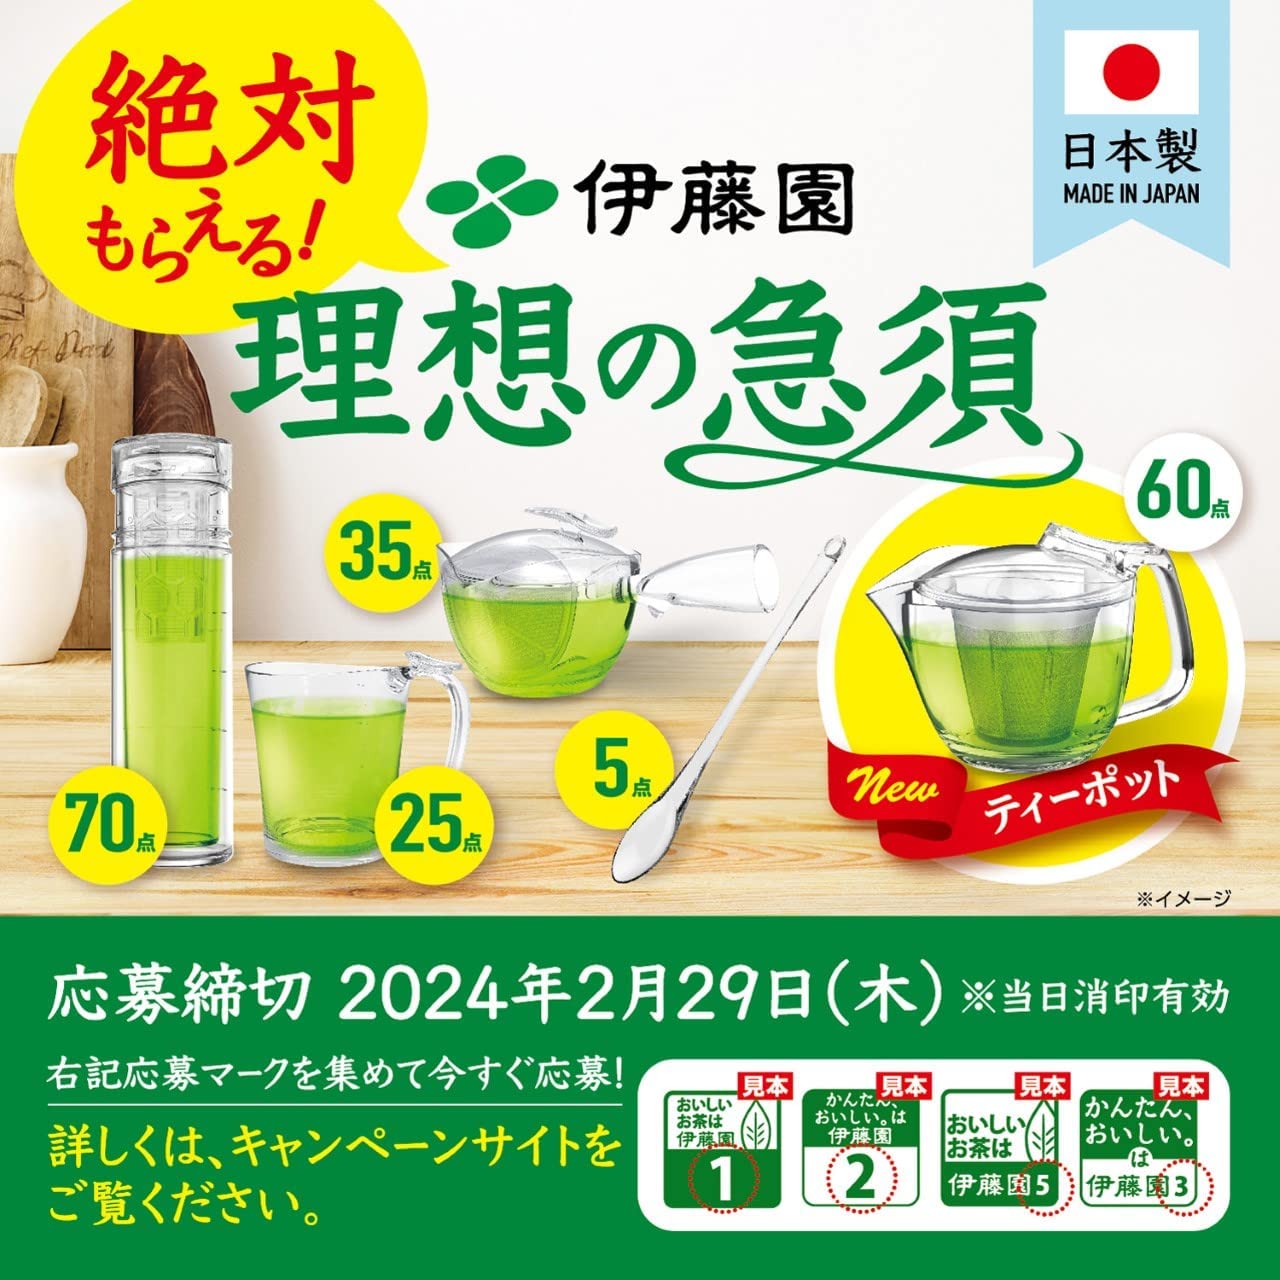 ITOEN Oi Ocha Instant Greentea อิโตเอ็น ชาผงพร้อมดื่ม ตัก 50ช้อน ชาอันดับ1